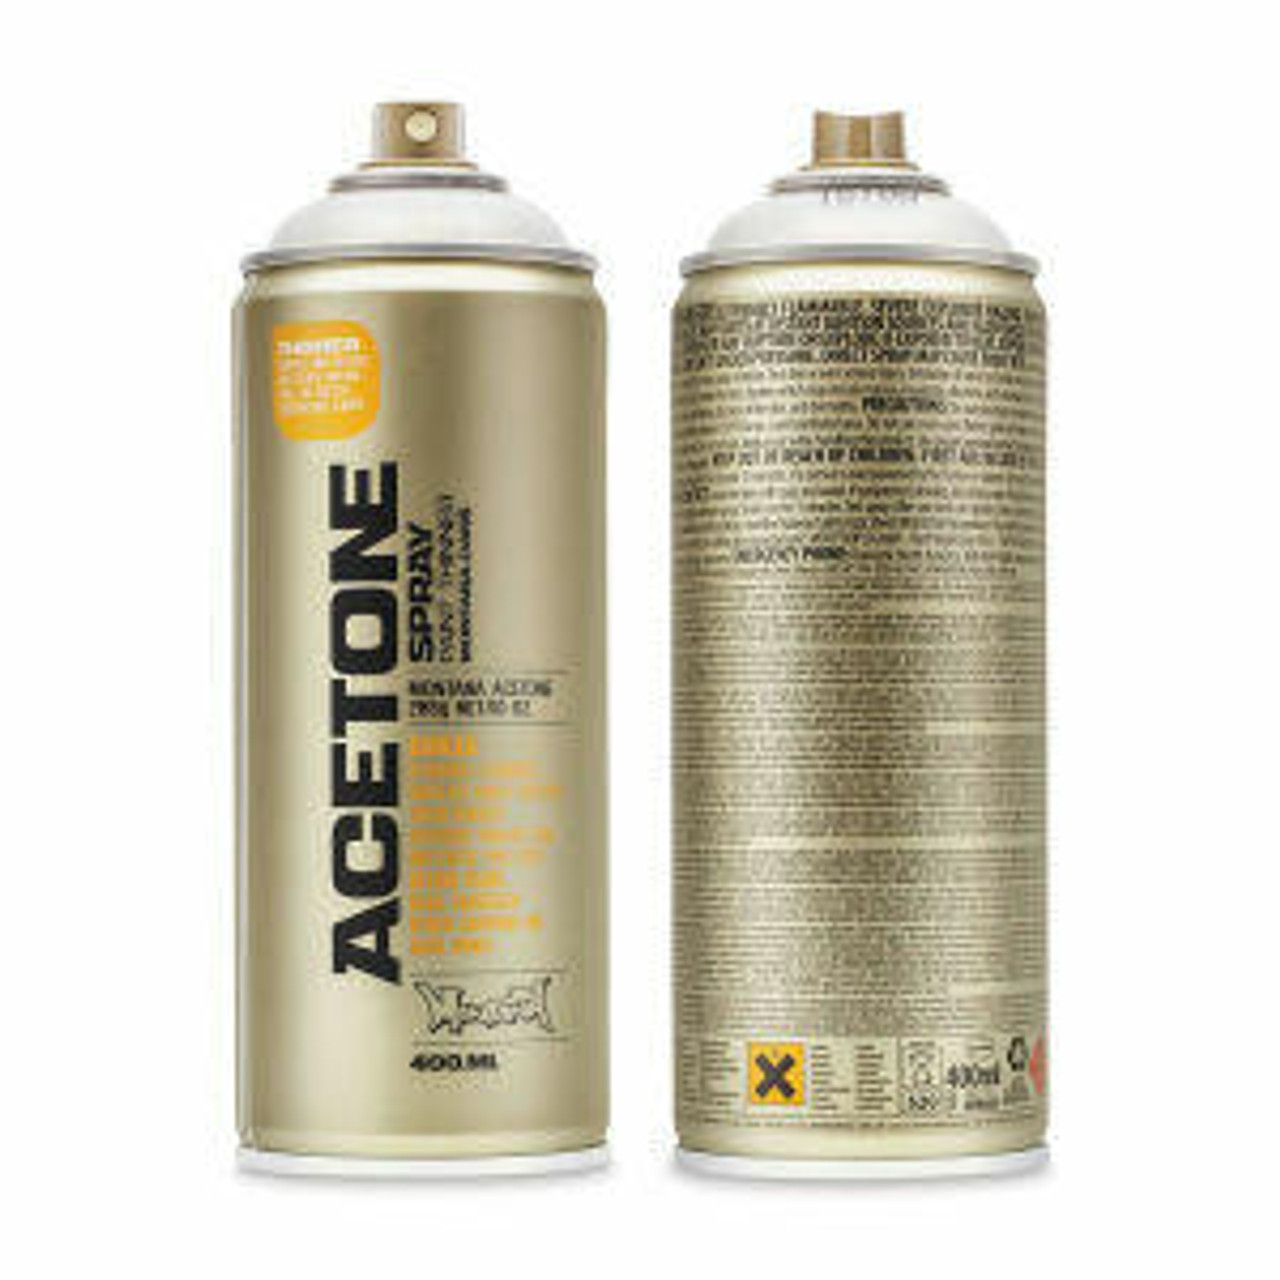 Montana Cans TECH ACETONE Paint Thinner Spray, 400ml